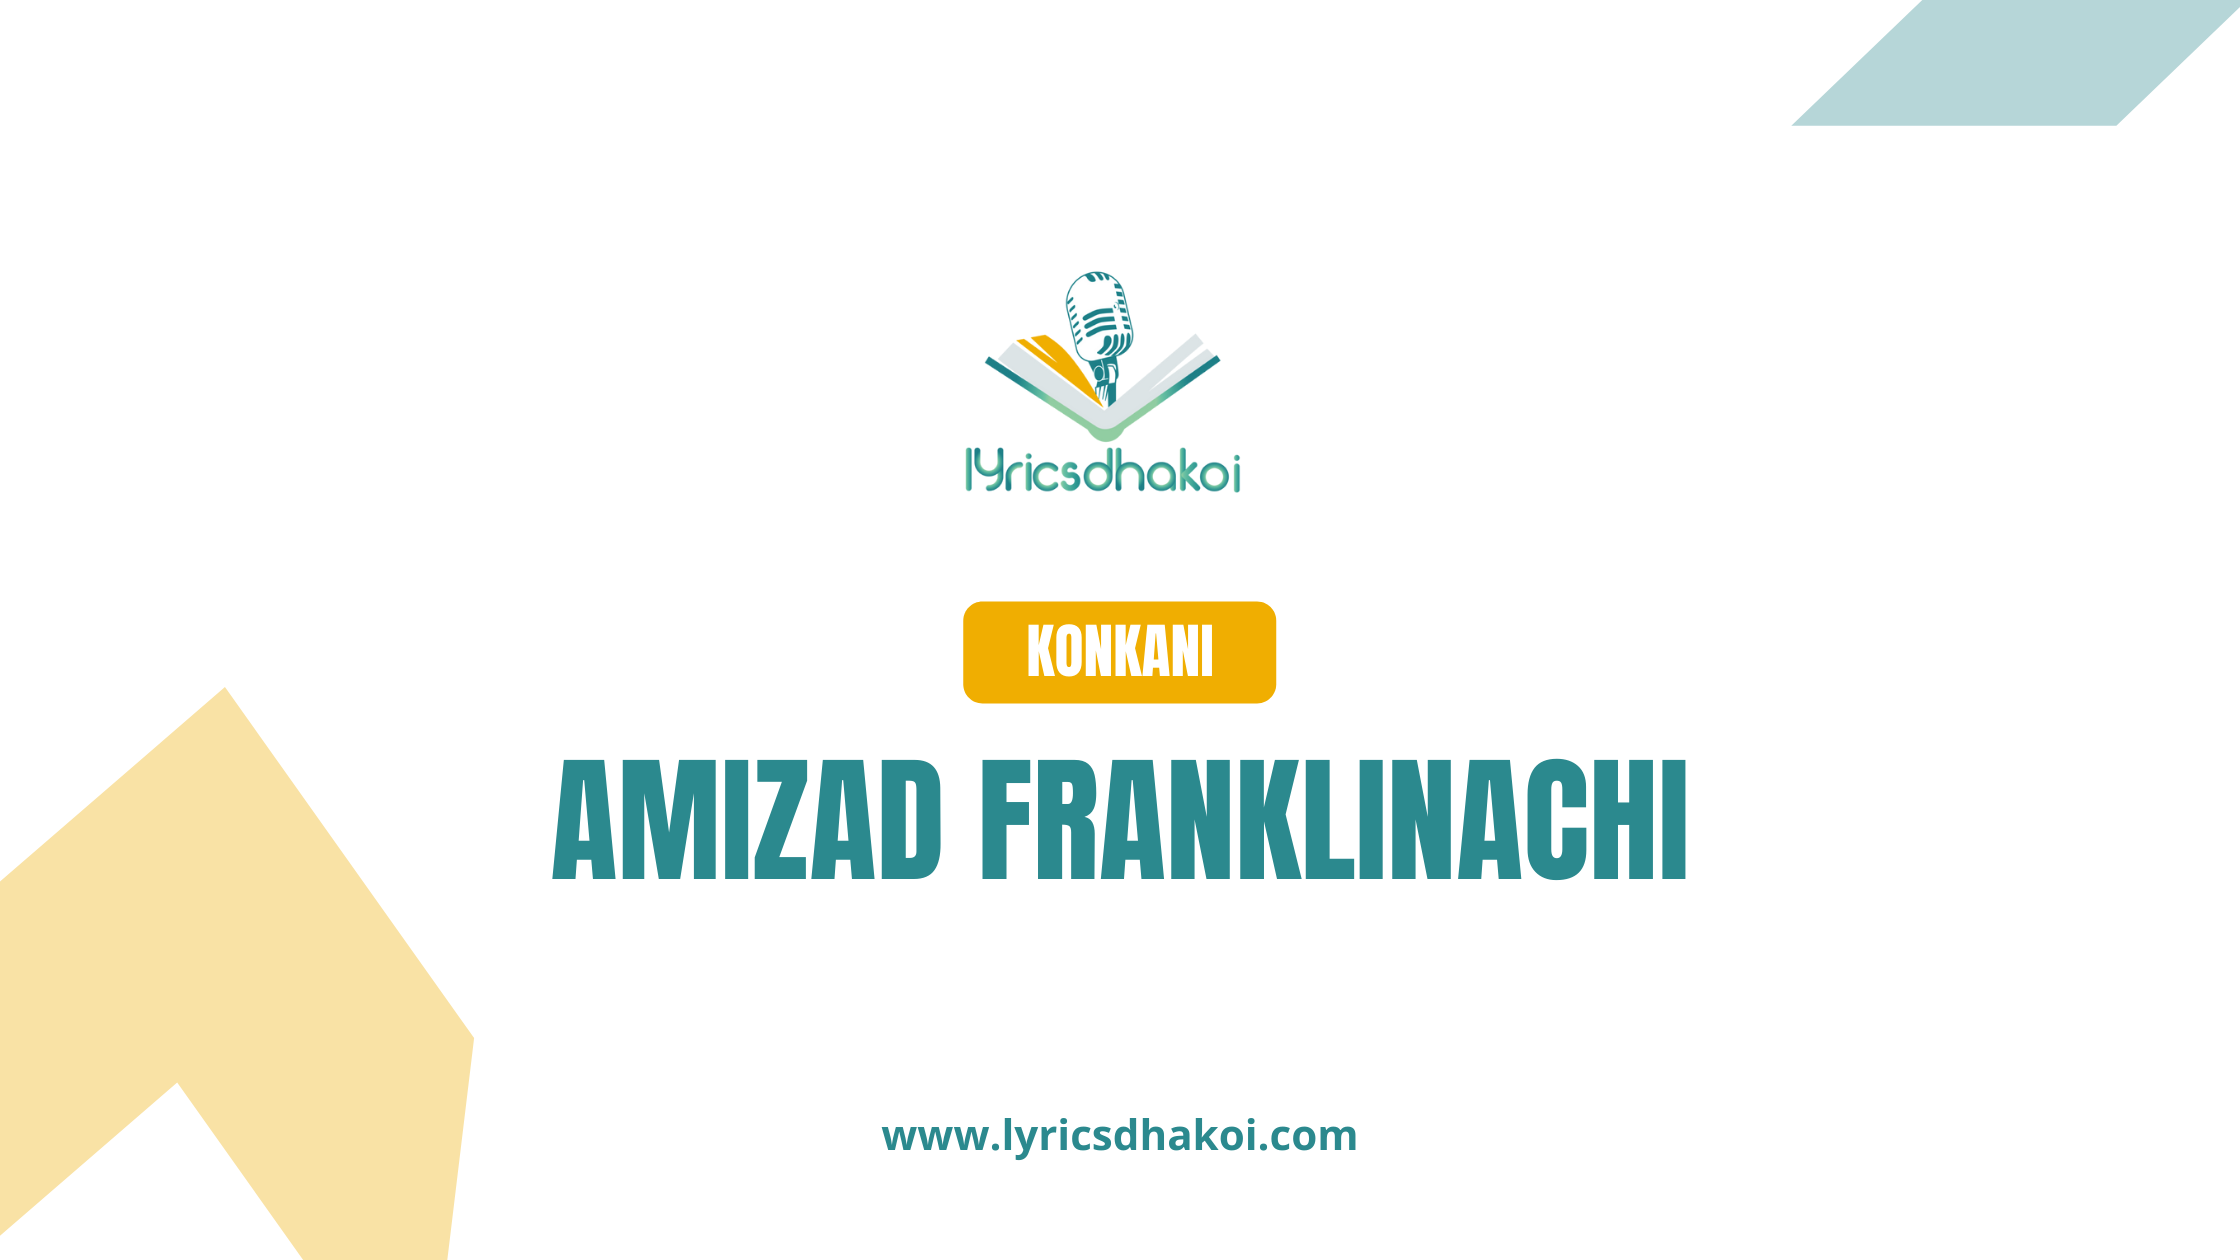 Amizad Franklinachi Konkani Lyrics for Karaoke Online - LyricsDhakoi.com